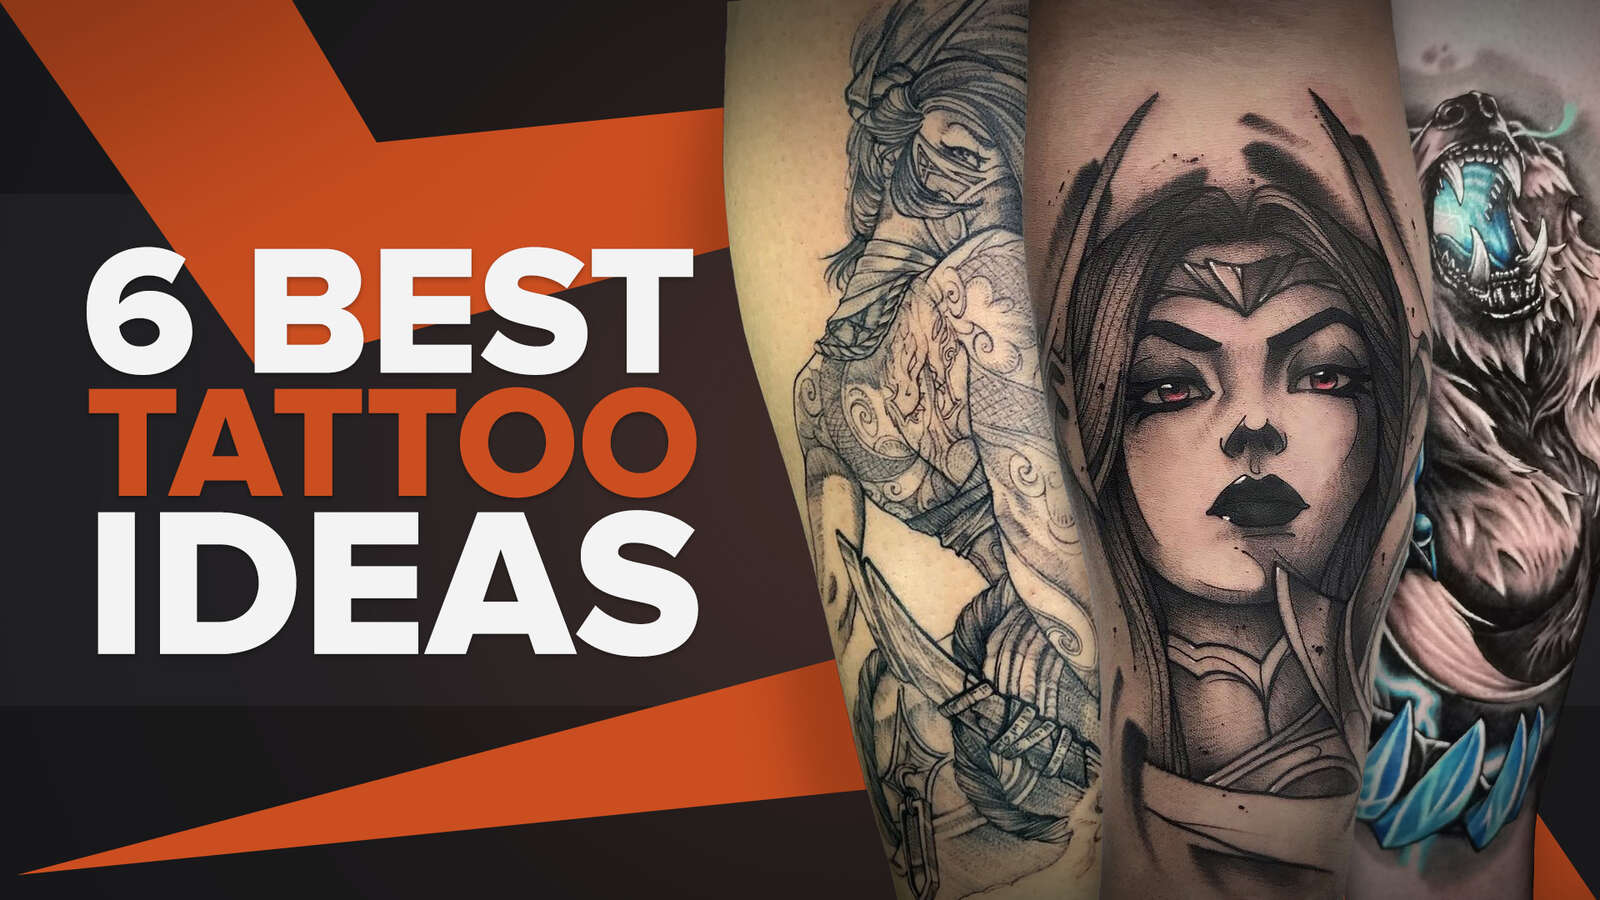 6 Best Tattoos Ideas for League of Legends Fans